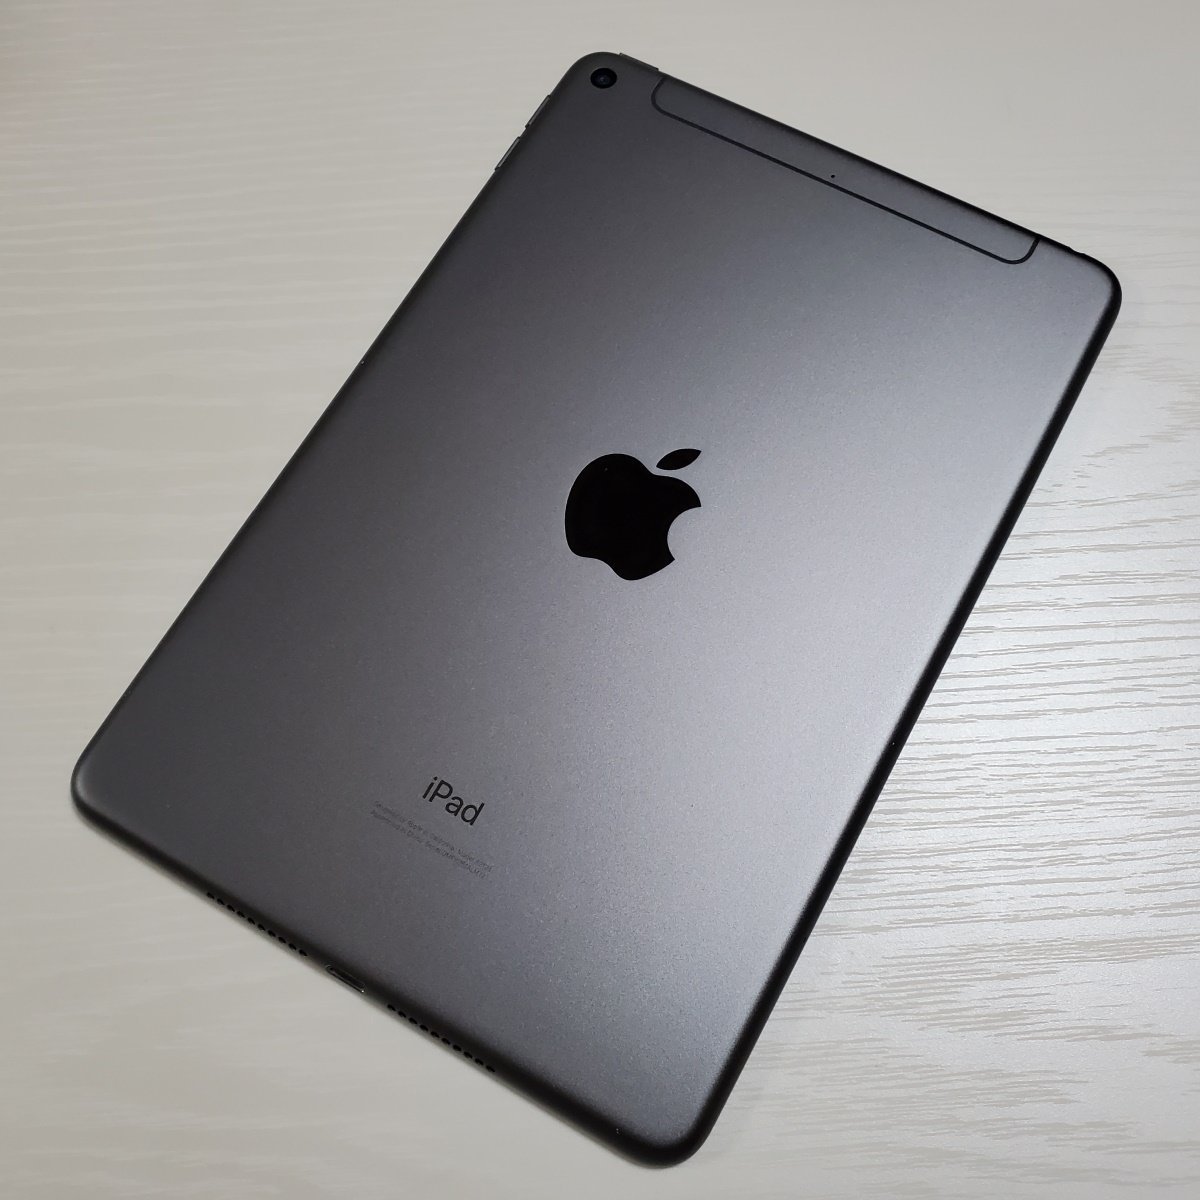 ☆【22377WM】 完動品 Apple MUX52JJ/A iPad mini (第5世代) スペースグレイ 64GB Wi-Fi+Cellular  国内版SIMフリー - aquapolis.com.pt